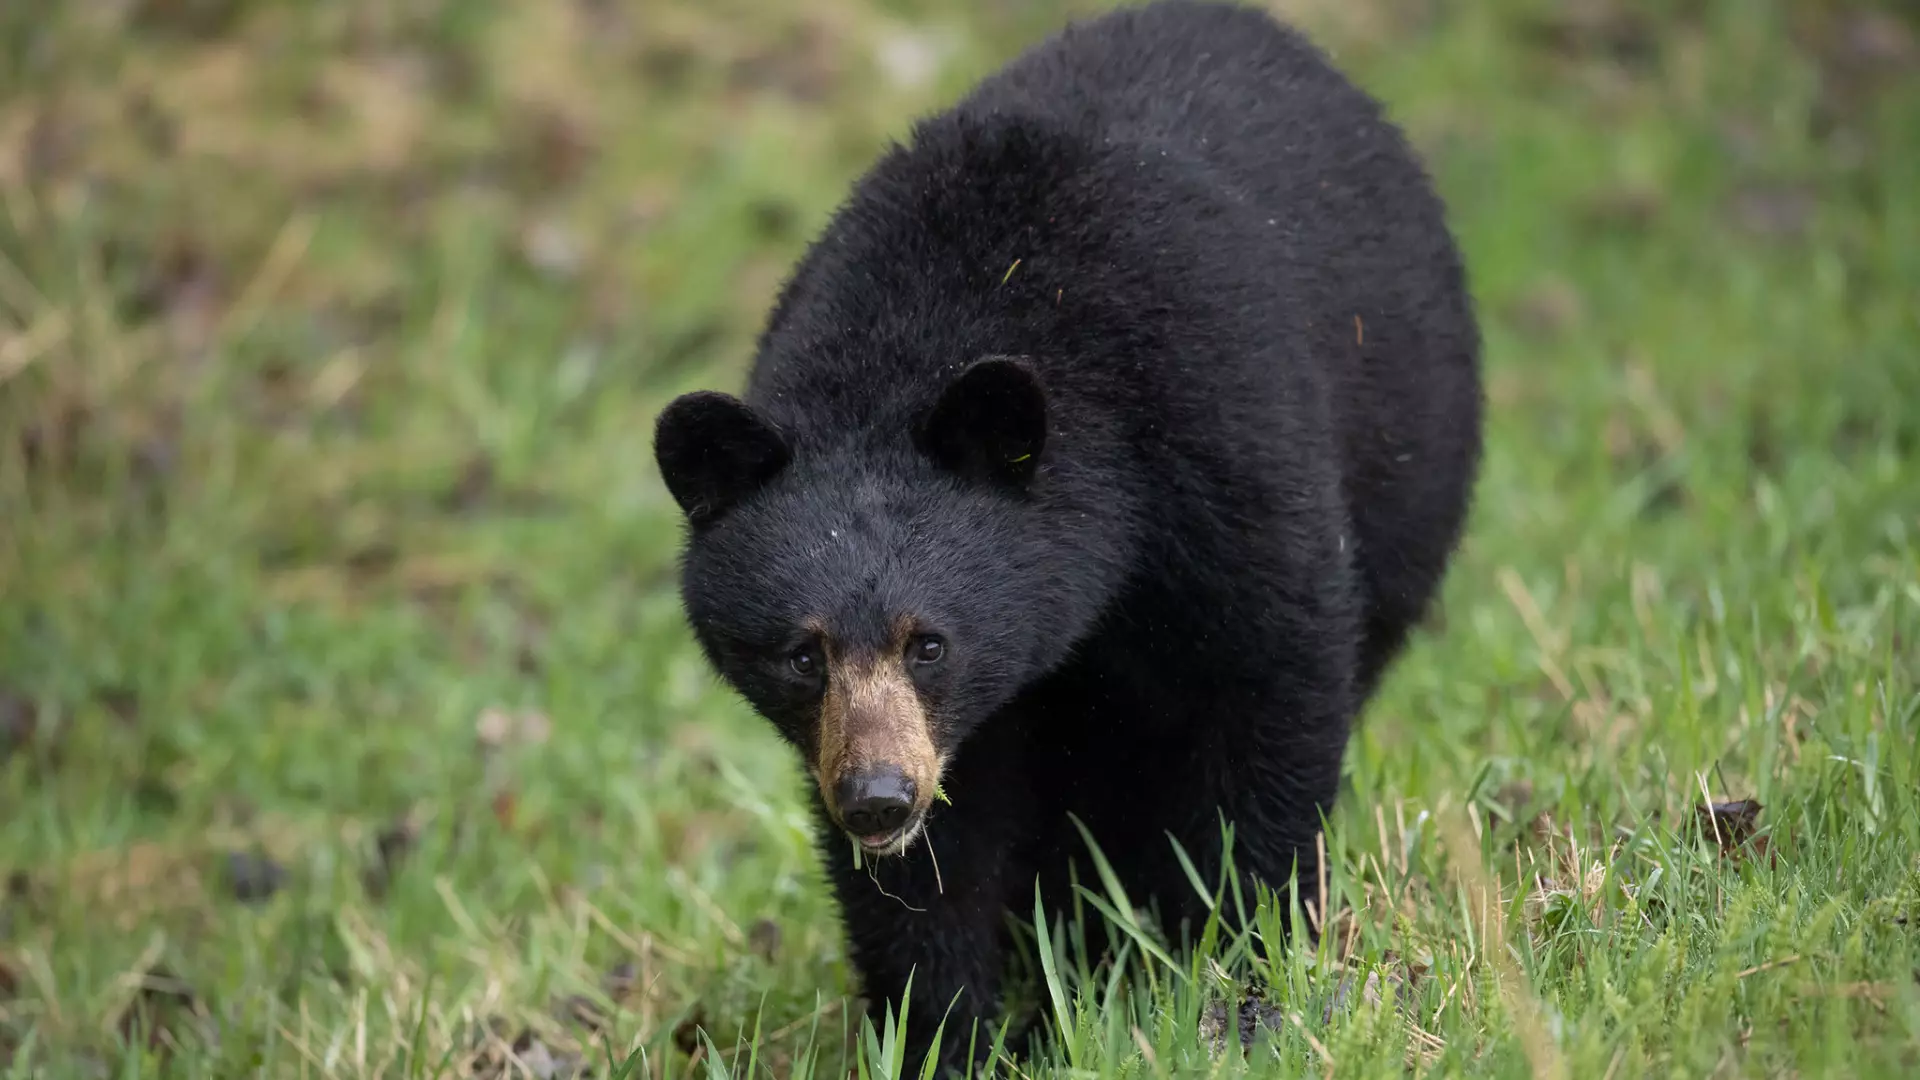 Beware of black bear in South Jersey